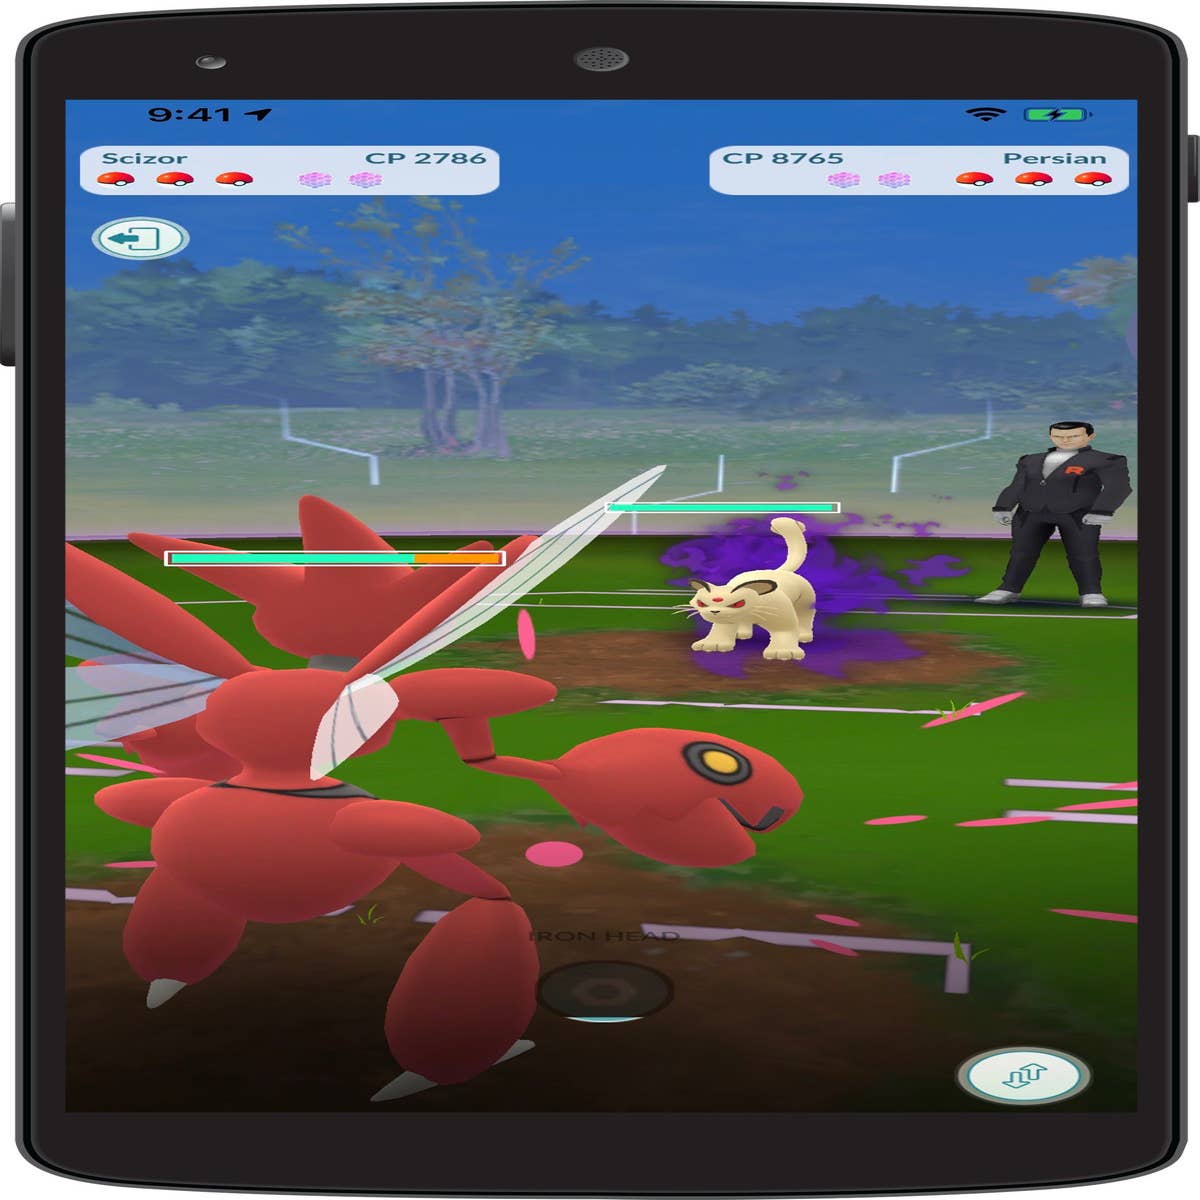 Pokémon GO terá batalha com Giovanni e Shadow Zapdos